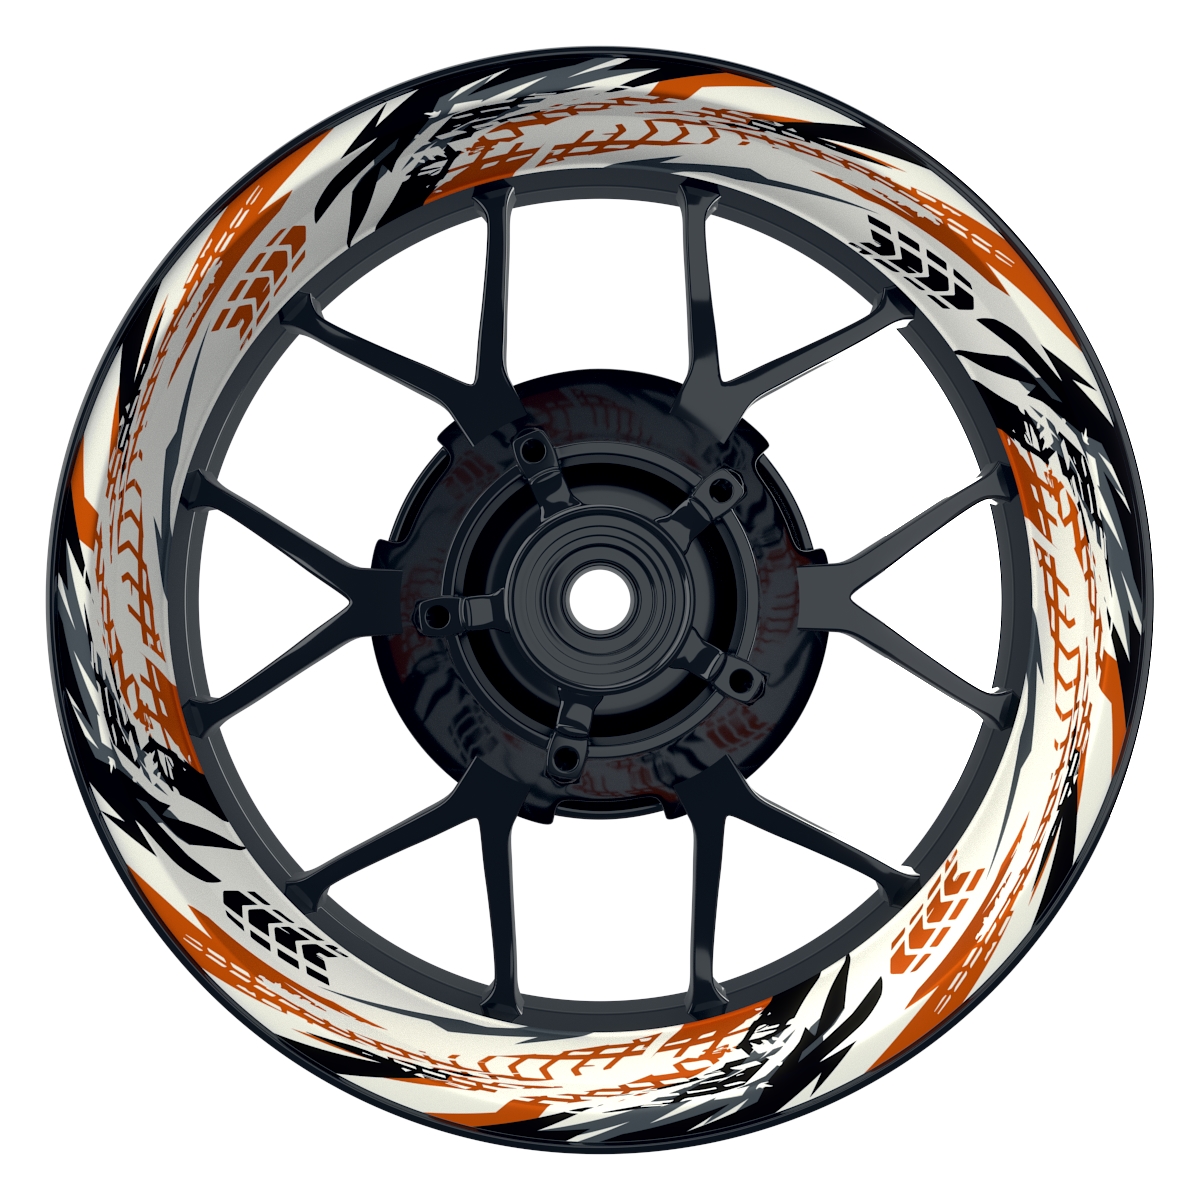 Tires weiss orange Wheelsticker Felgenaufkleber